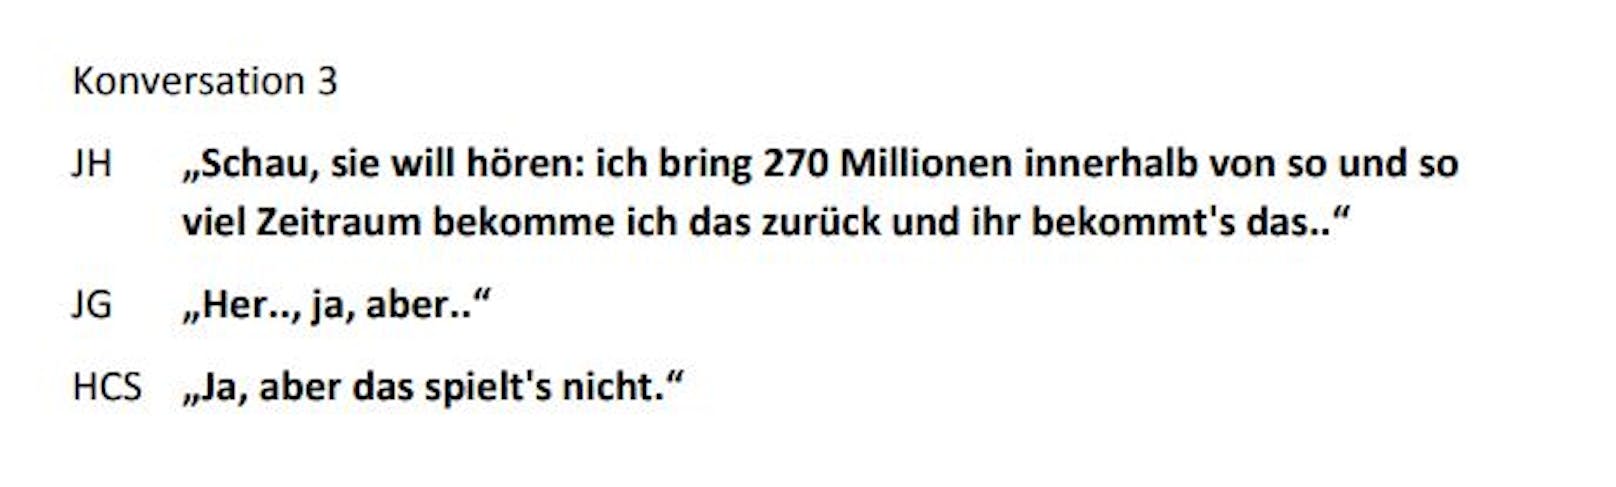 JH (Detektiv Julian H.),&nbsp;JG (<a href="https://www.heute.at/s/ibiza-skandal-video-hc-strache-interview-kronen-zeitung-45130875">Johann Gudenus</a>) und HCS (Heinz-Christian Strache) im Gespräch